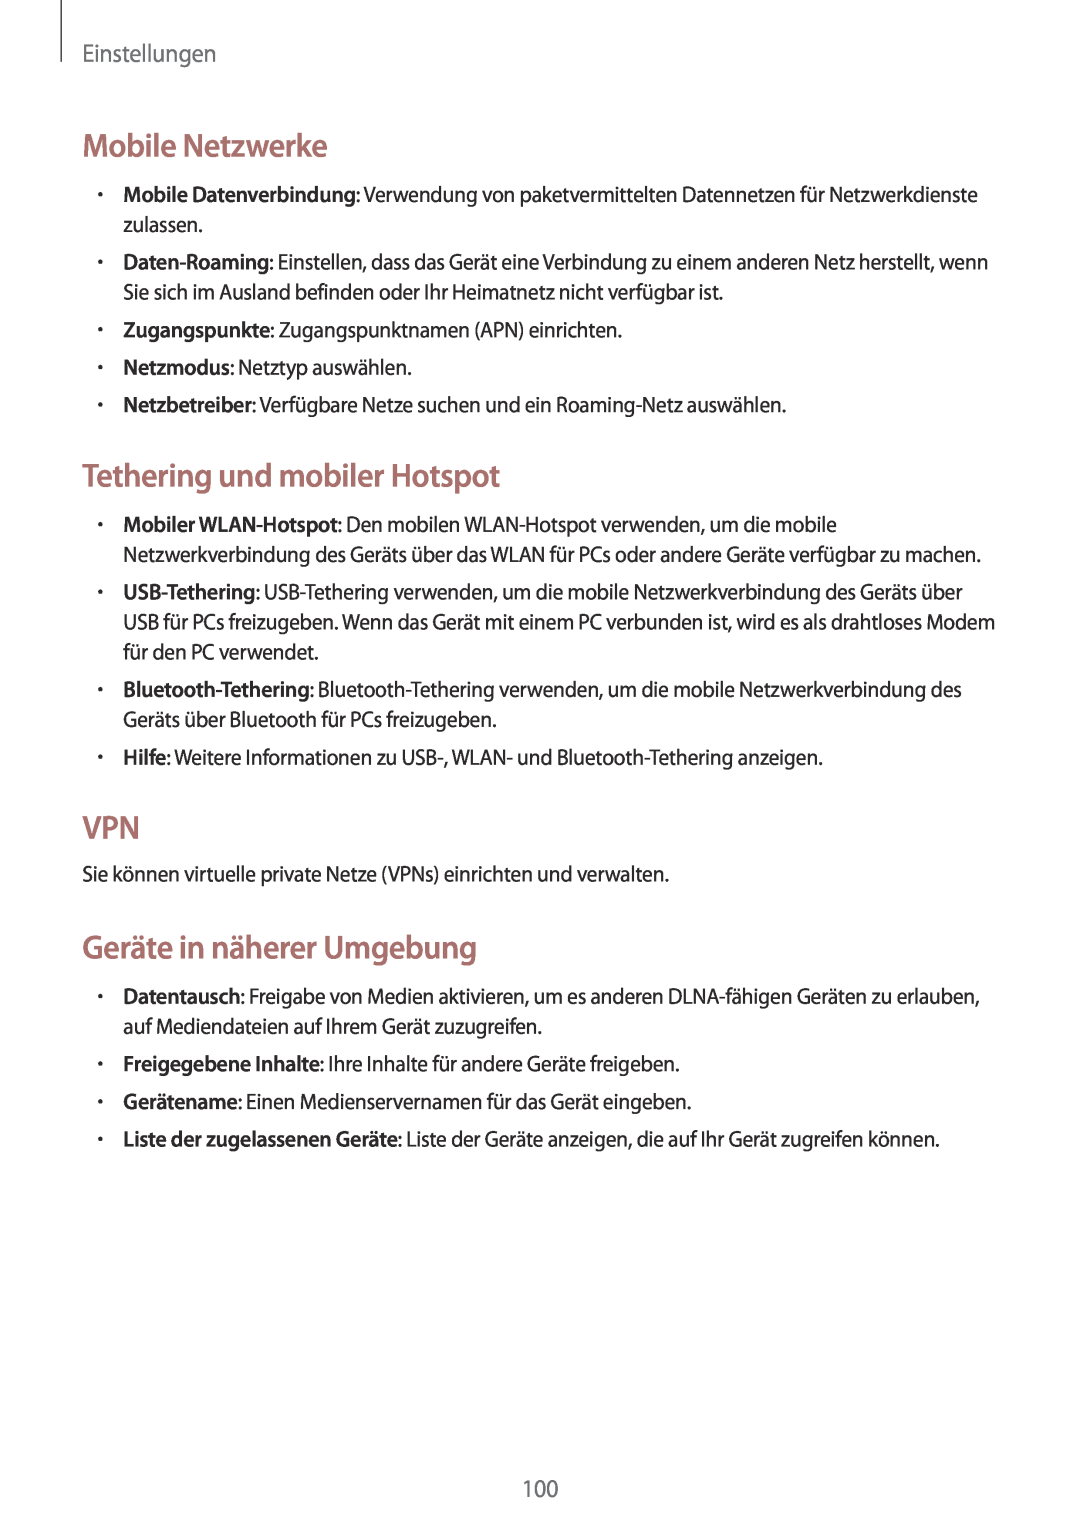 Samsung GT-I8190RWATPH manual Mobile Netzwerke, Tethering und mobiler Hotspot, Geräte in näherer Umgebung, Einstellungen 